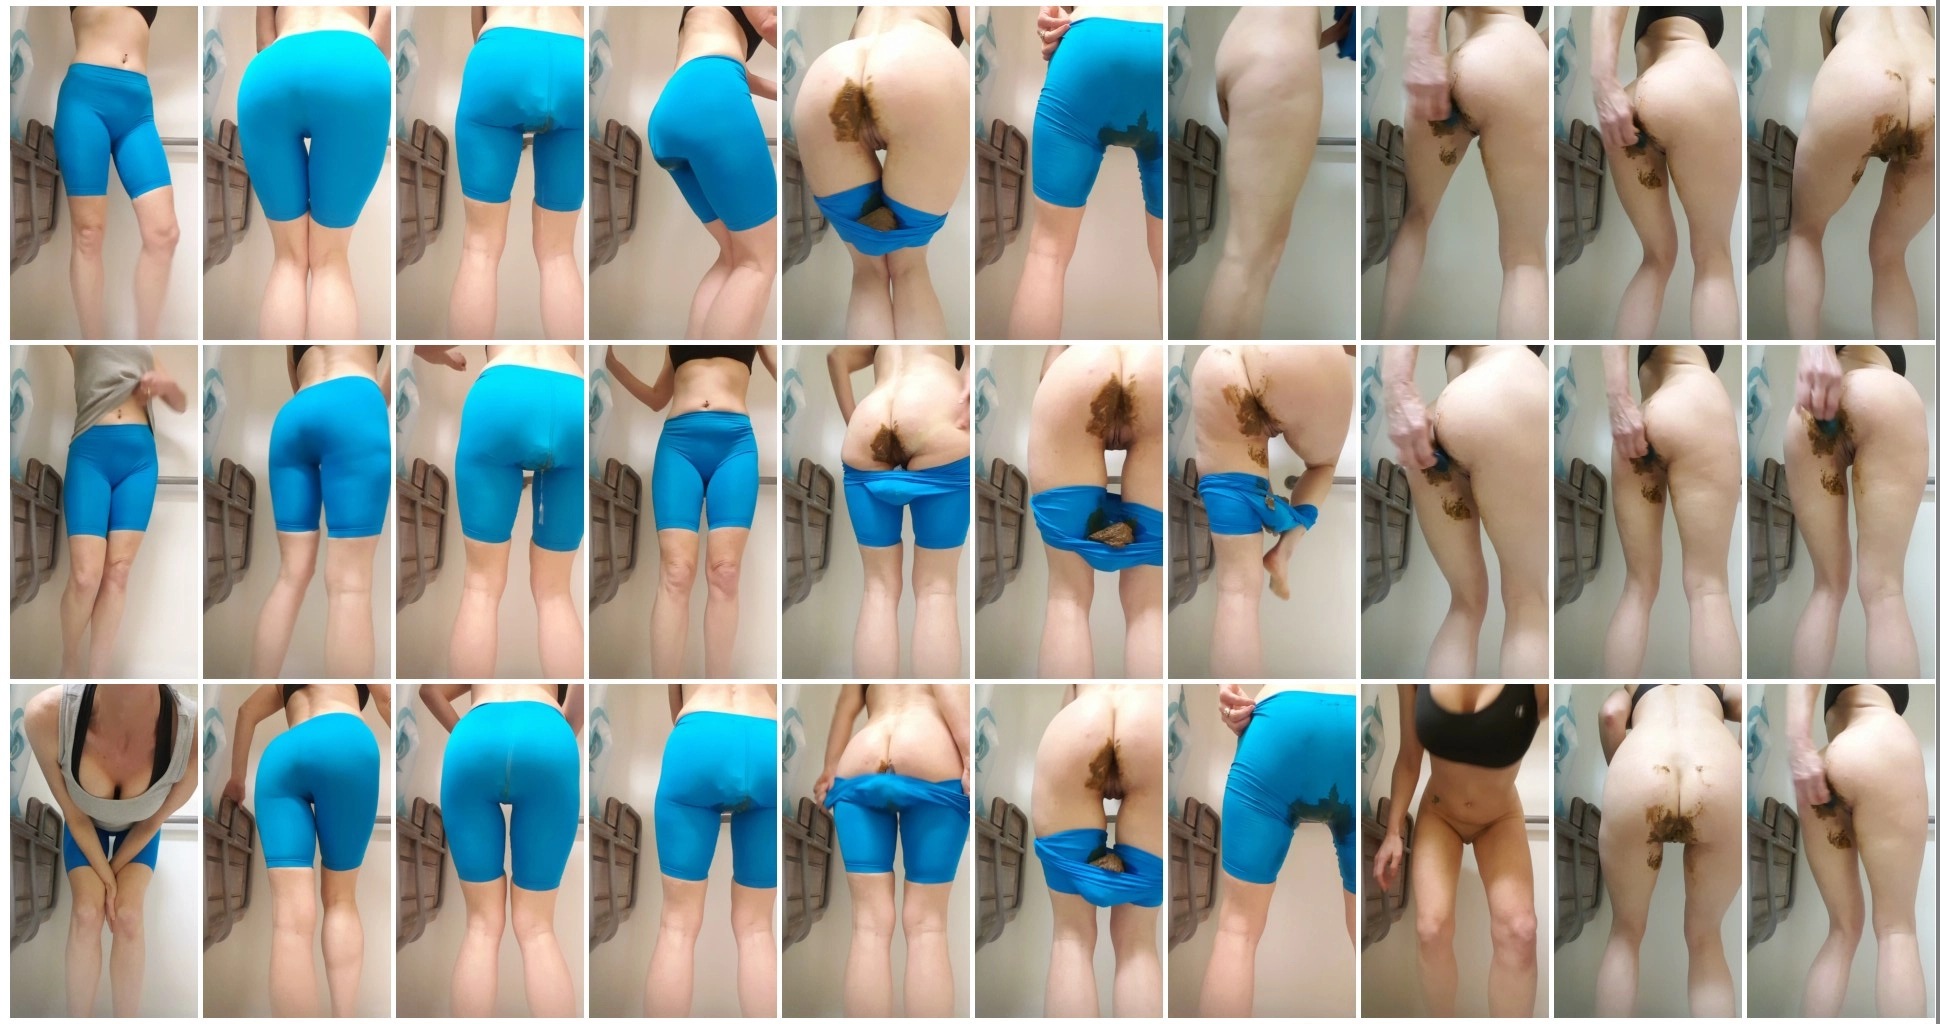 ZARZAR01 - GIANT Yoga Pant Fill, Pee, Butt Plug Play [Scat solo, shit, defecation, Pissing,  Masturbation,Dirty  shorts,Dildo masturbation,Smearing]